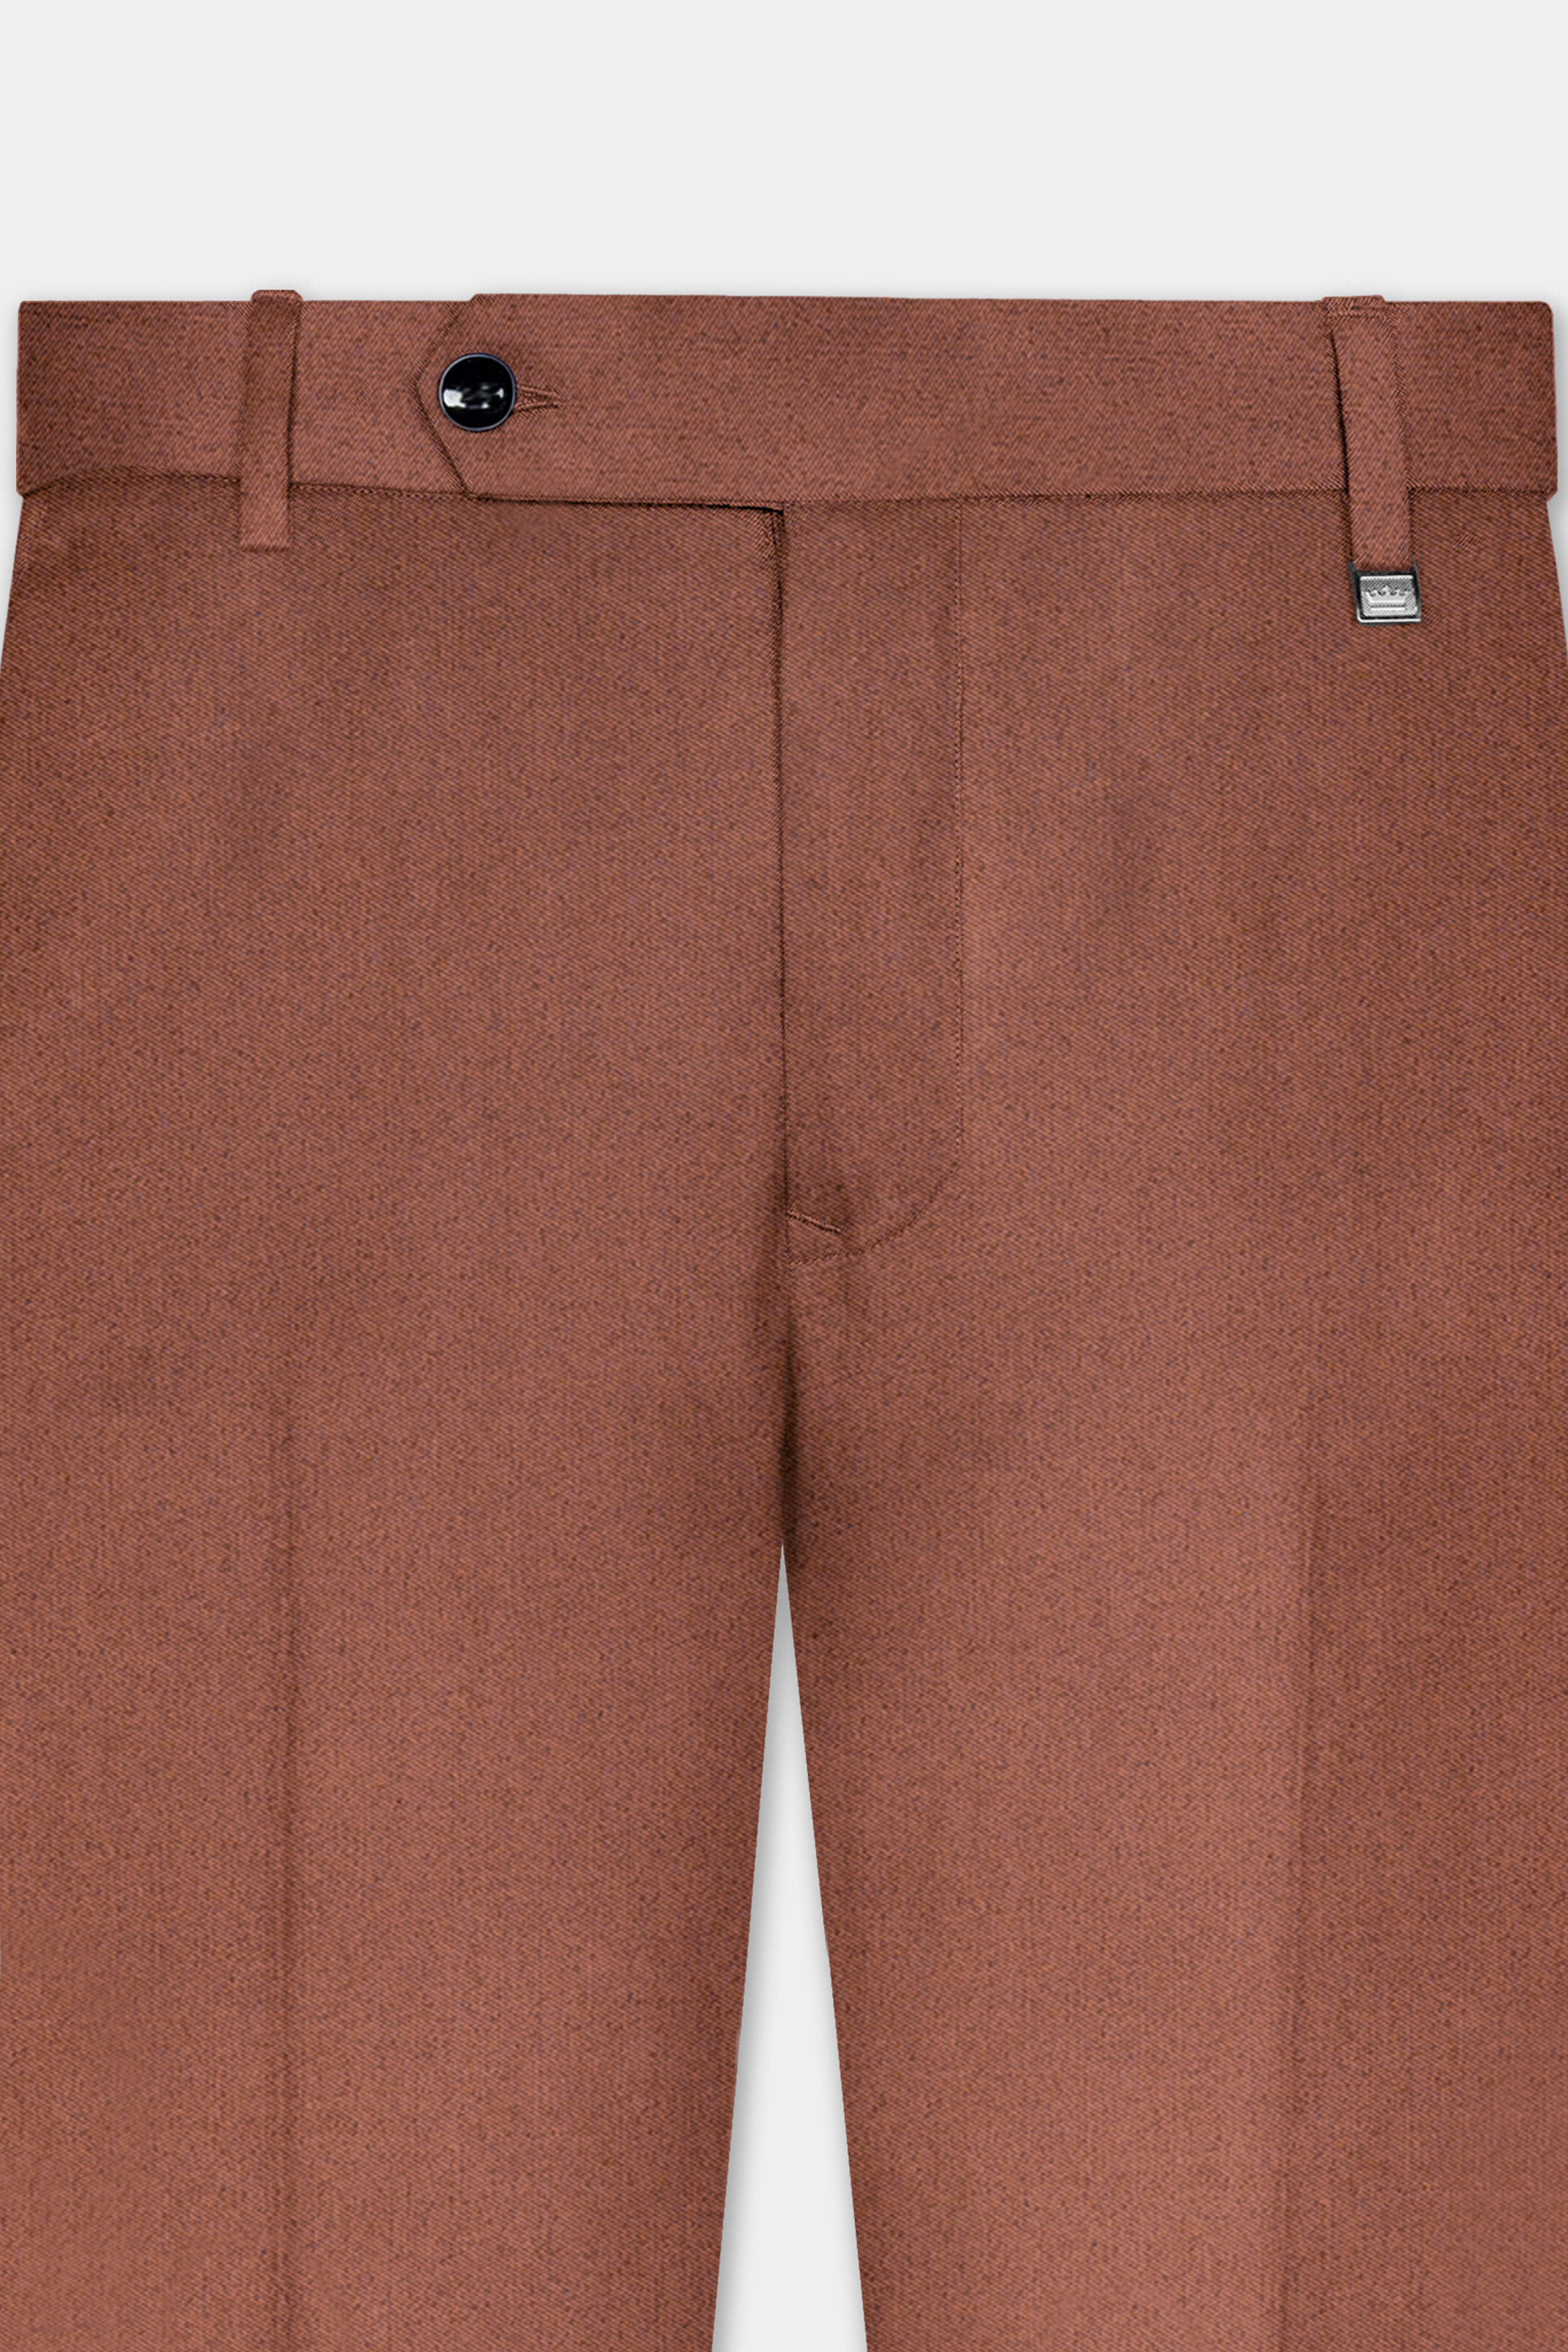 Palliser Brown Wool Rich Pant